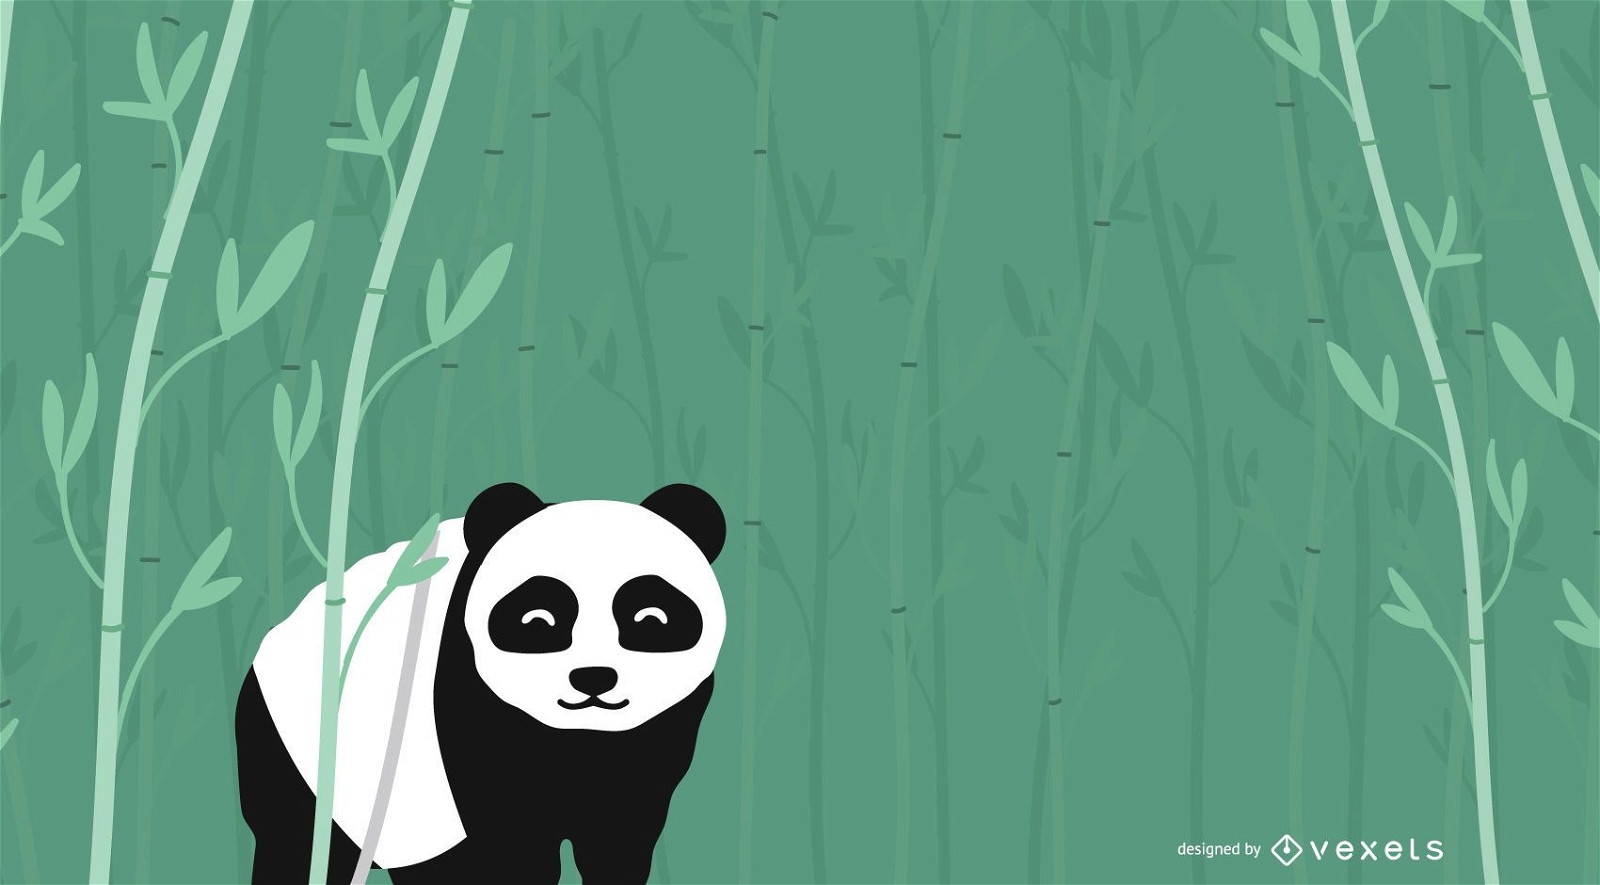 Bambuswald Panda B?r Hintergrund